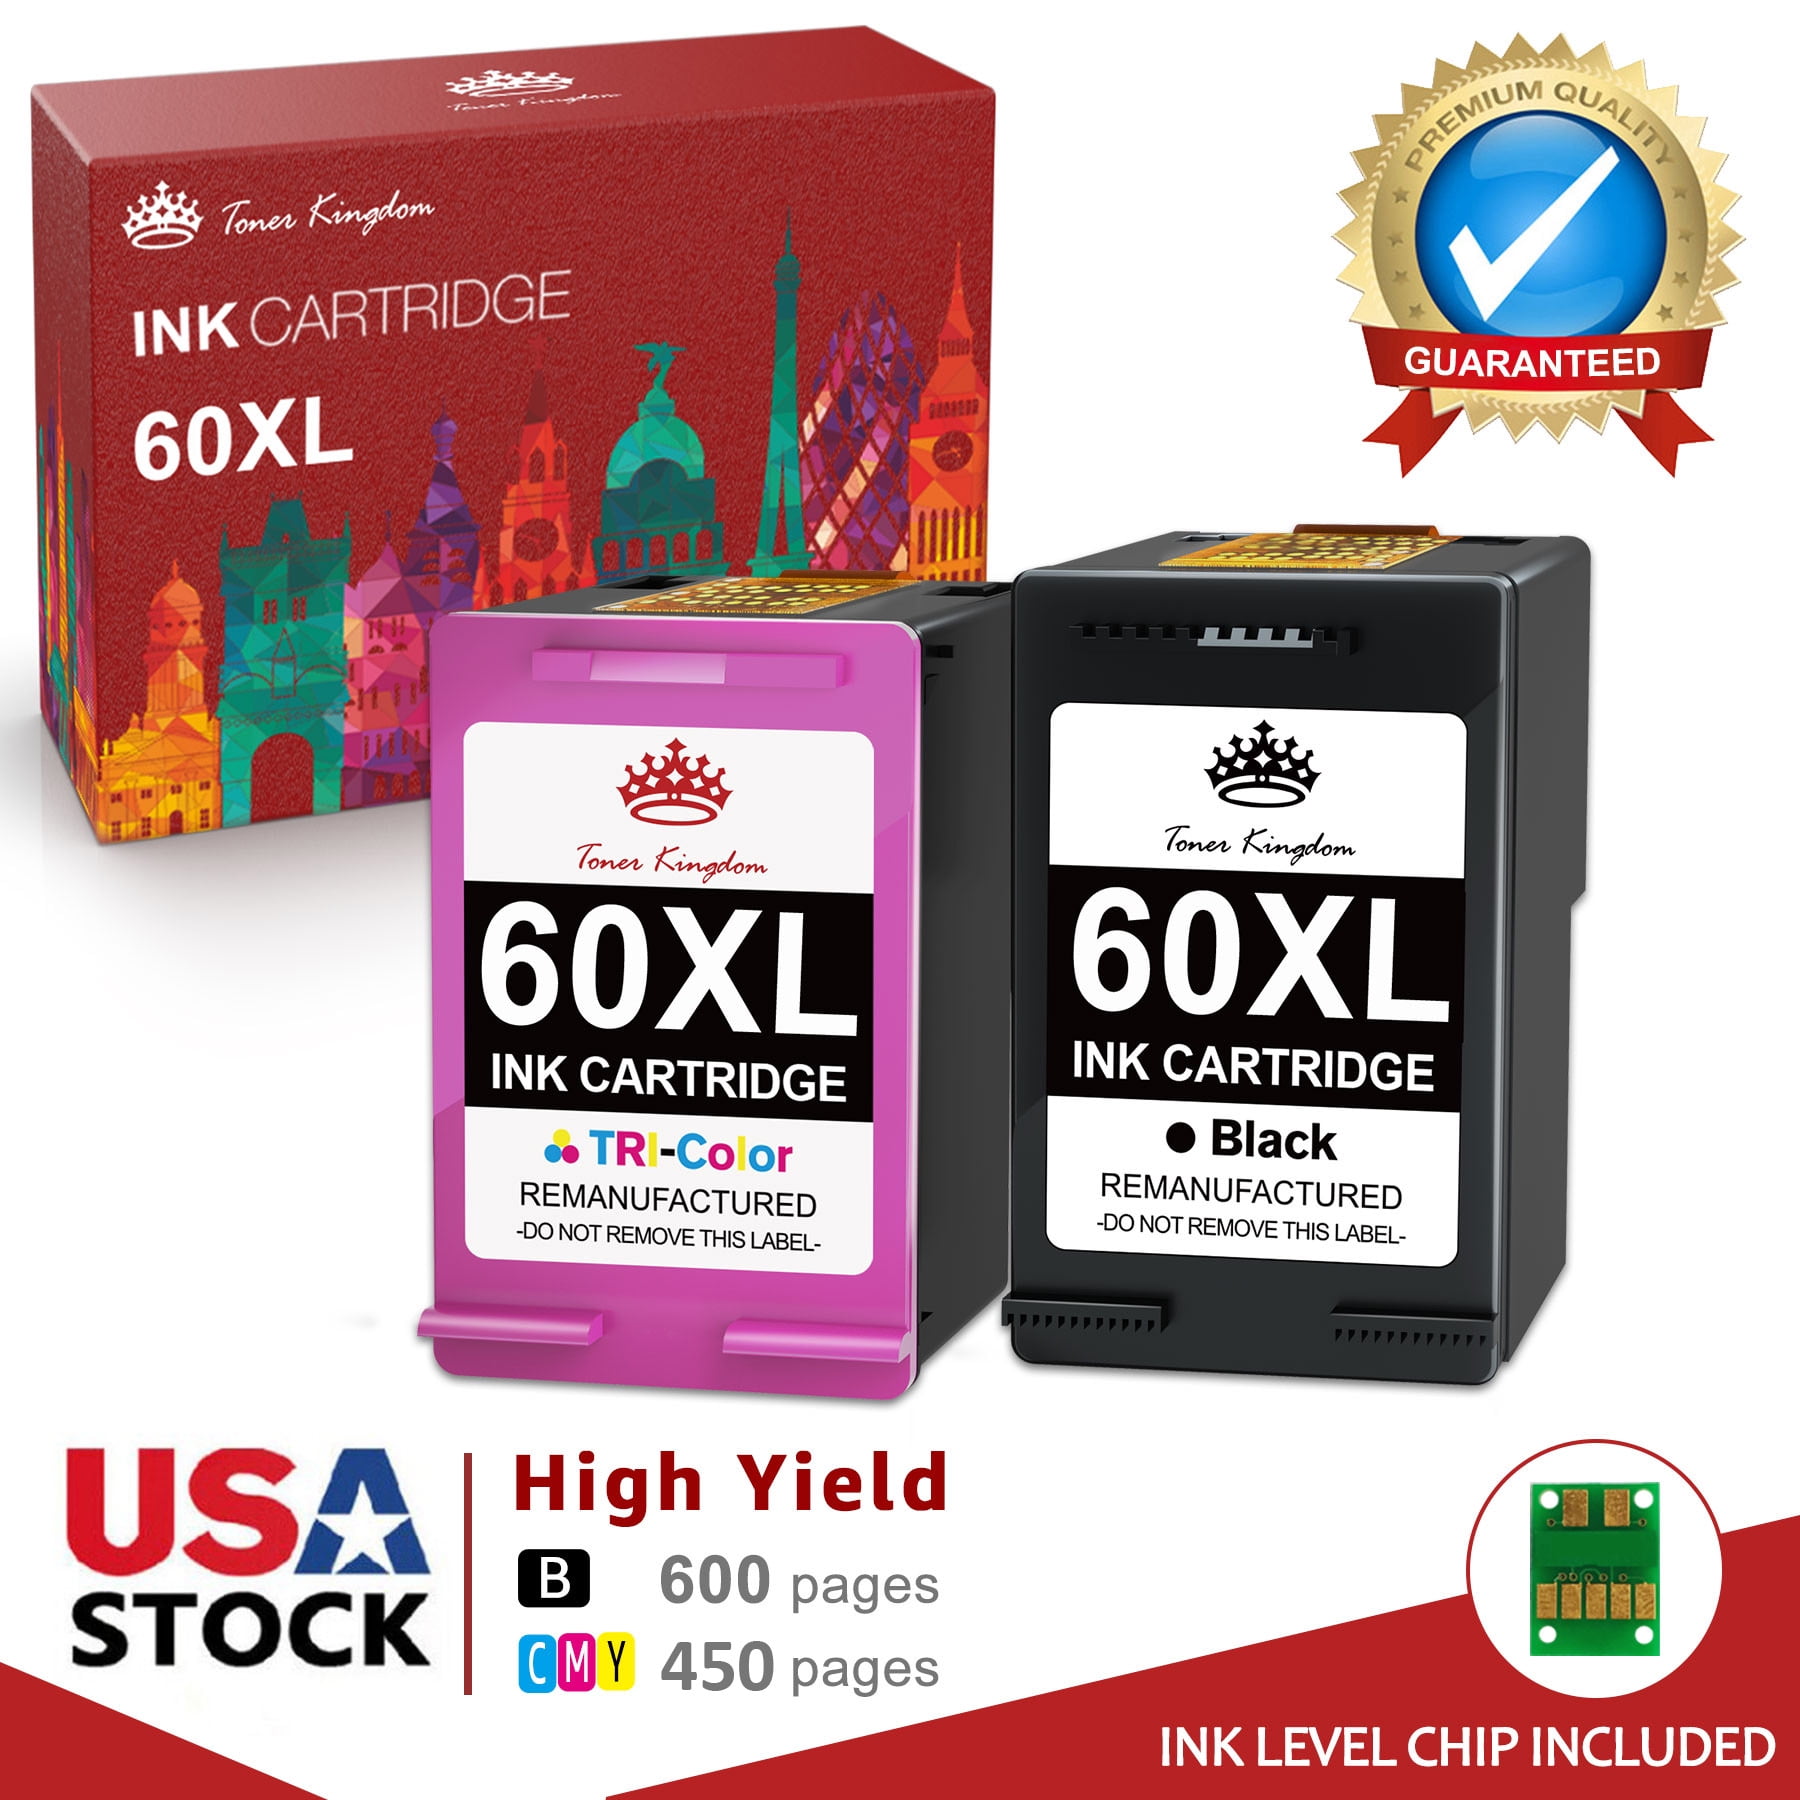 High Yield 60XL Replacement for HP 60 Ink Cartridges Combo Pack for PhotoSmart C4780 C4795 C4680 C4650 D110 D110a DeskJet F4480 F4280 F4580 D2530 D2545 D2680 Envy 100 (Black and Color